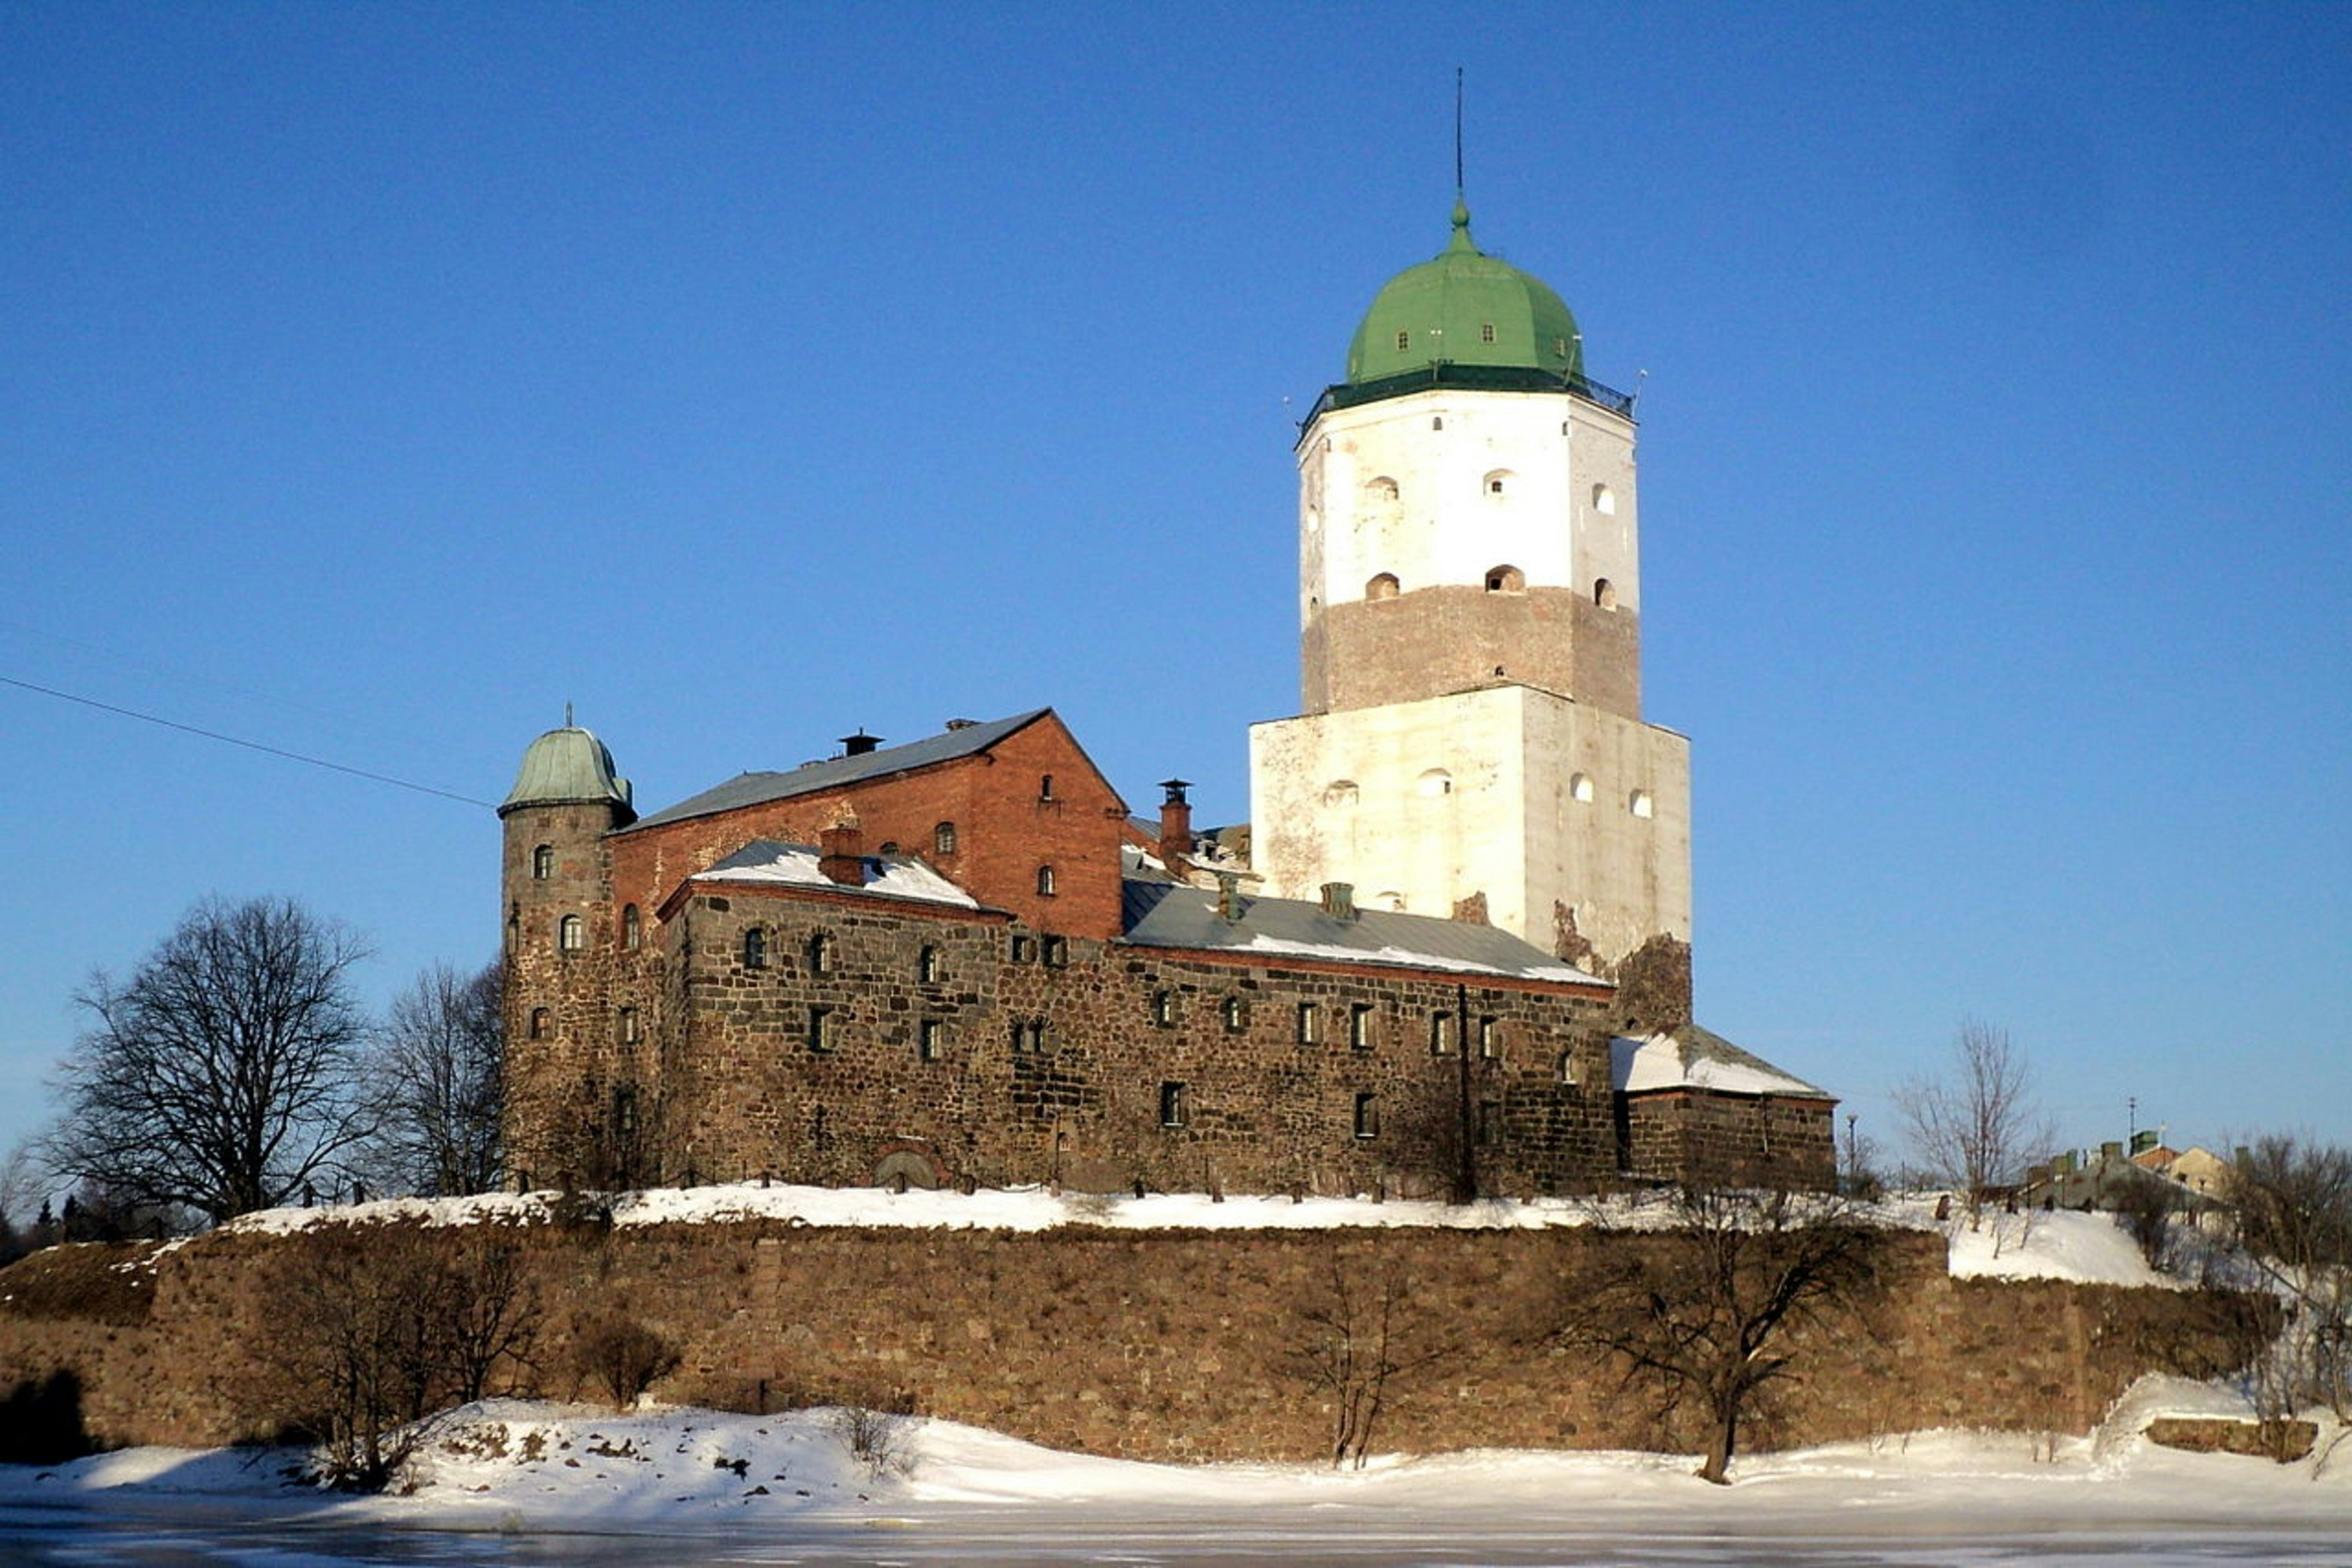 St Olaf’s Tower